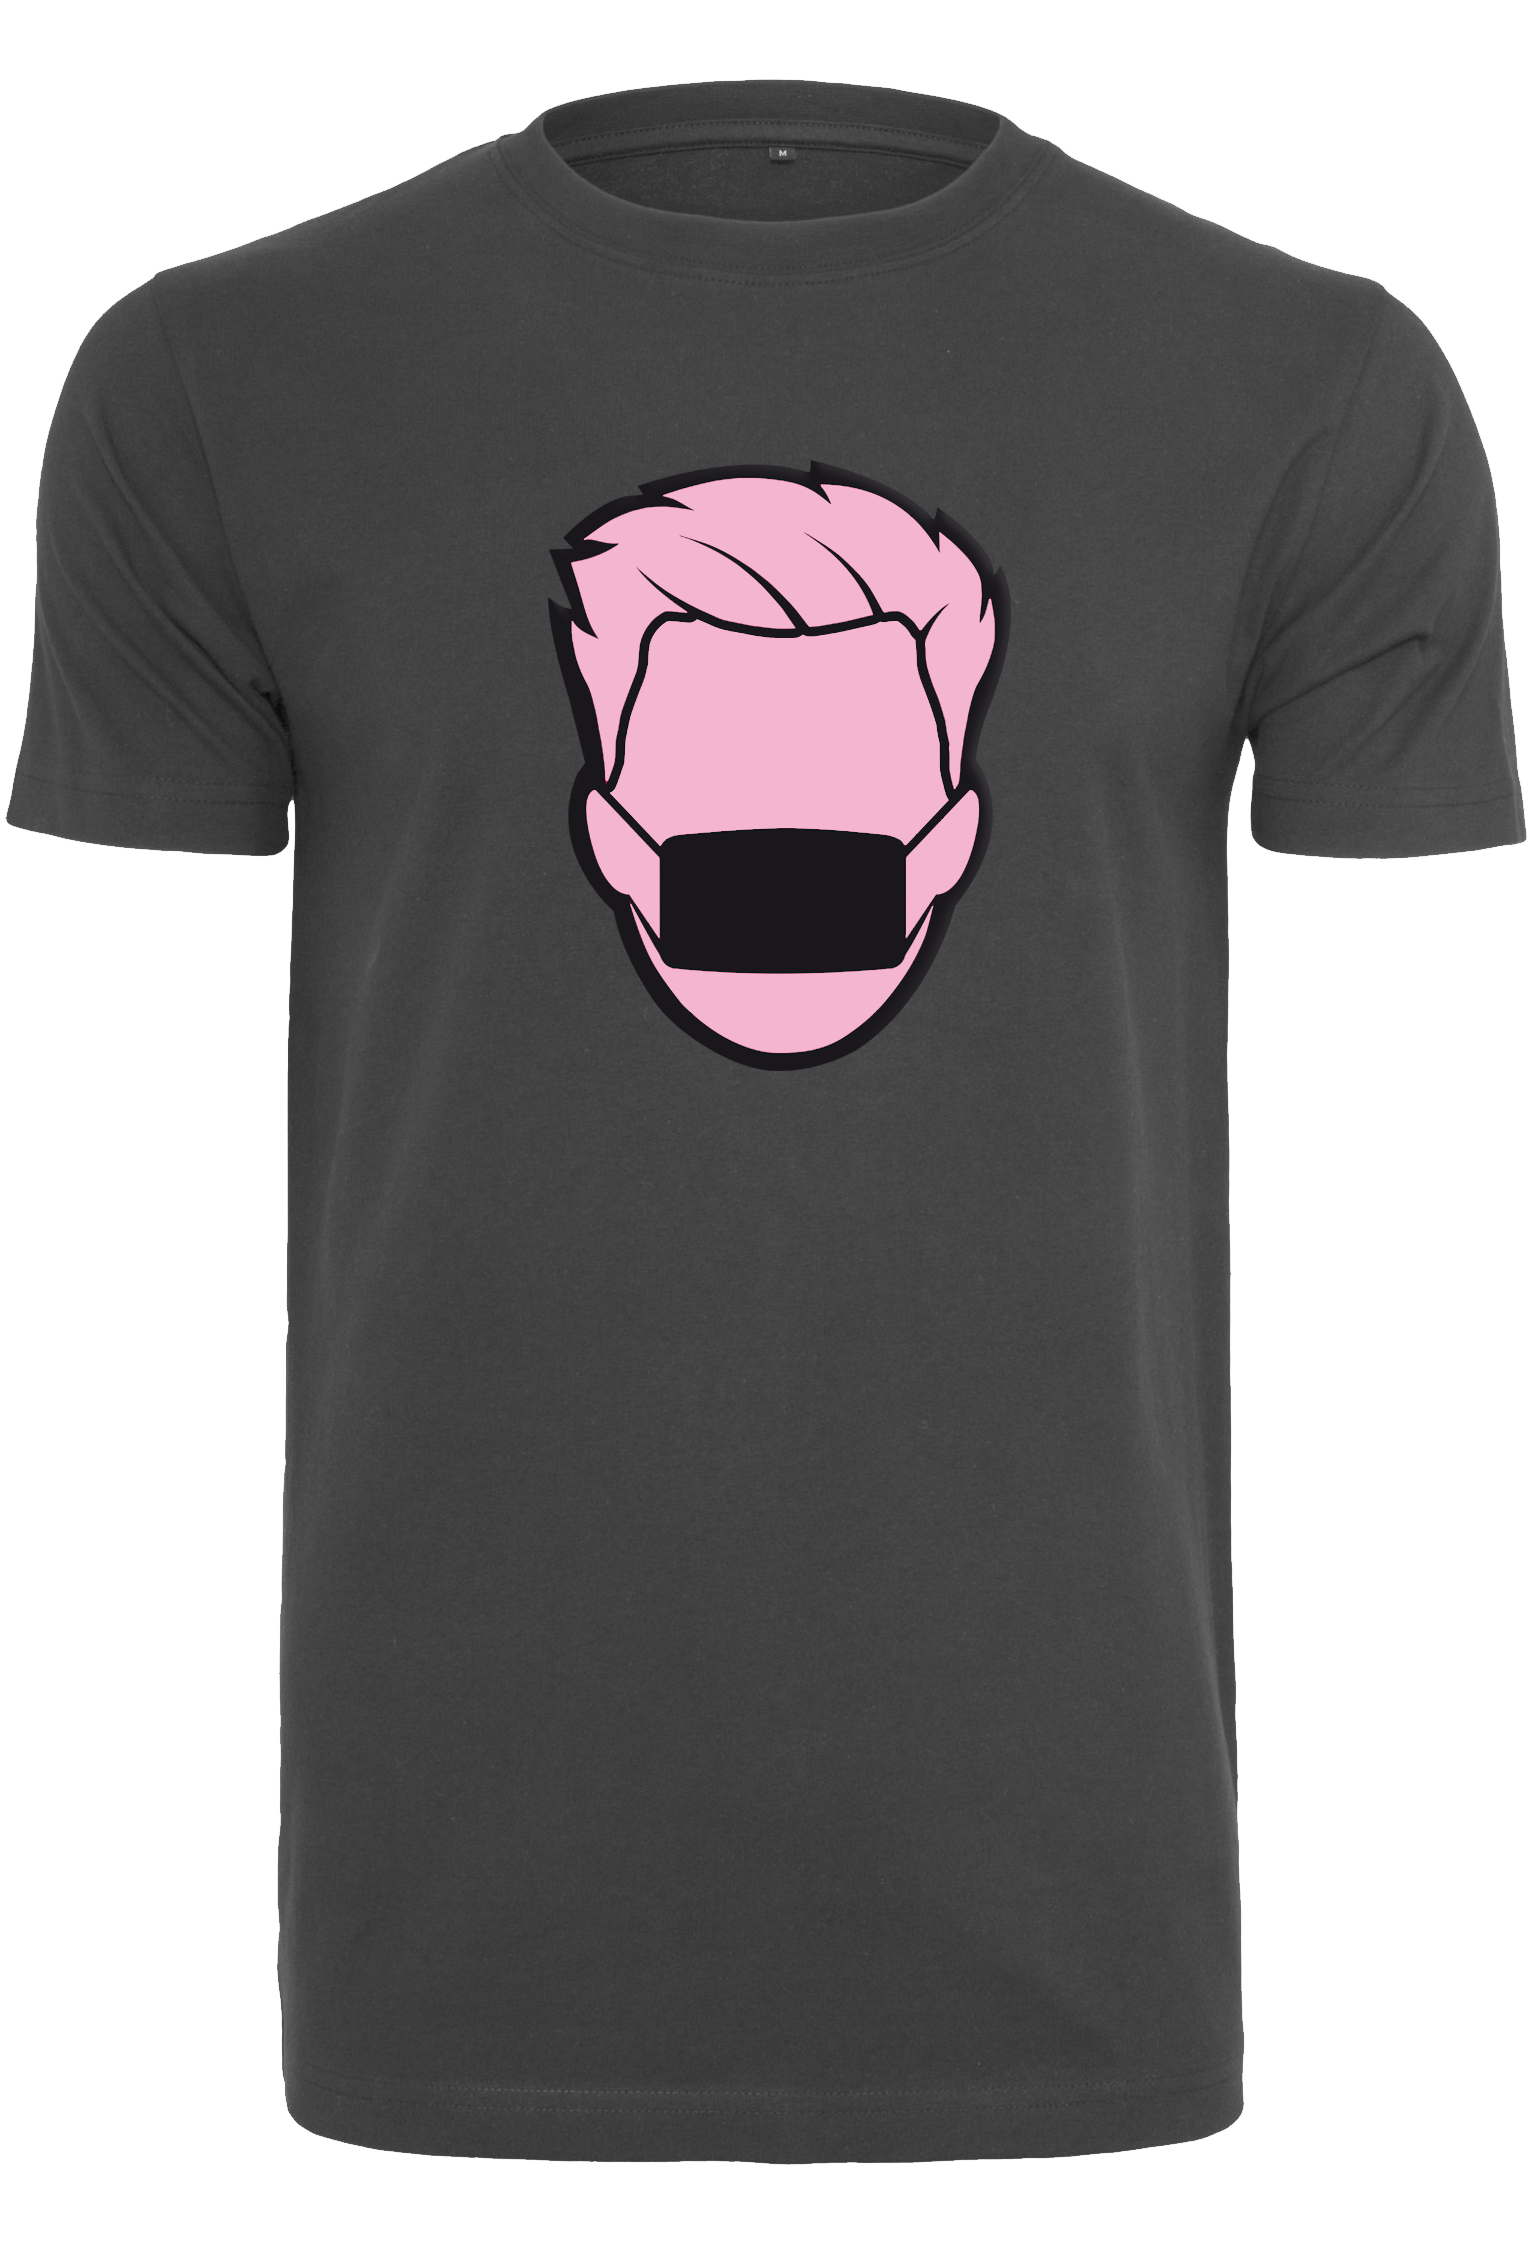 Pinkbee black T-Shirt